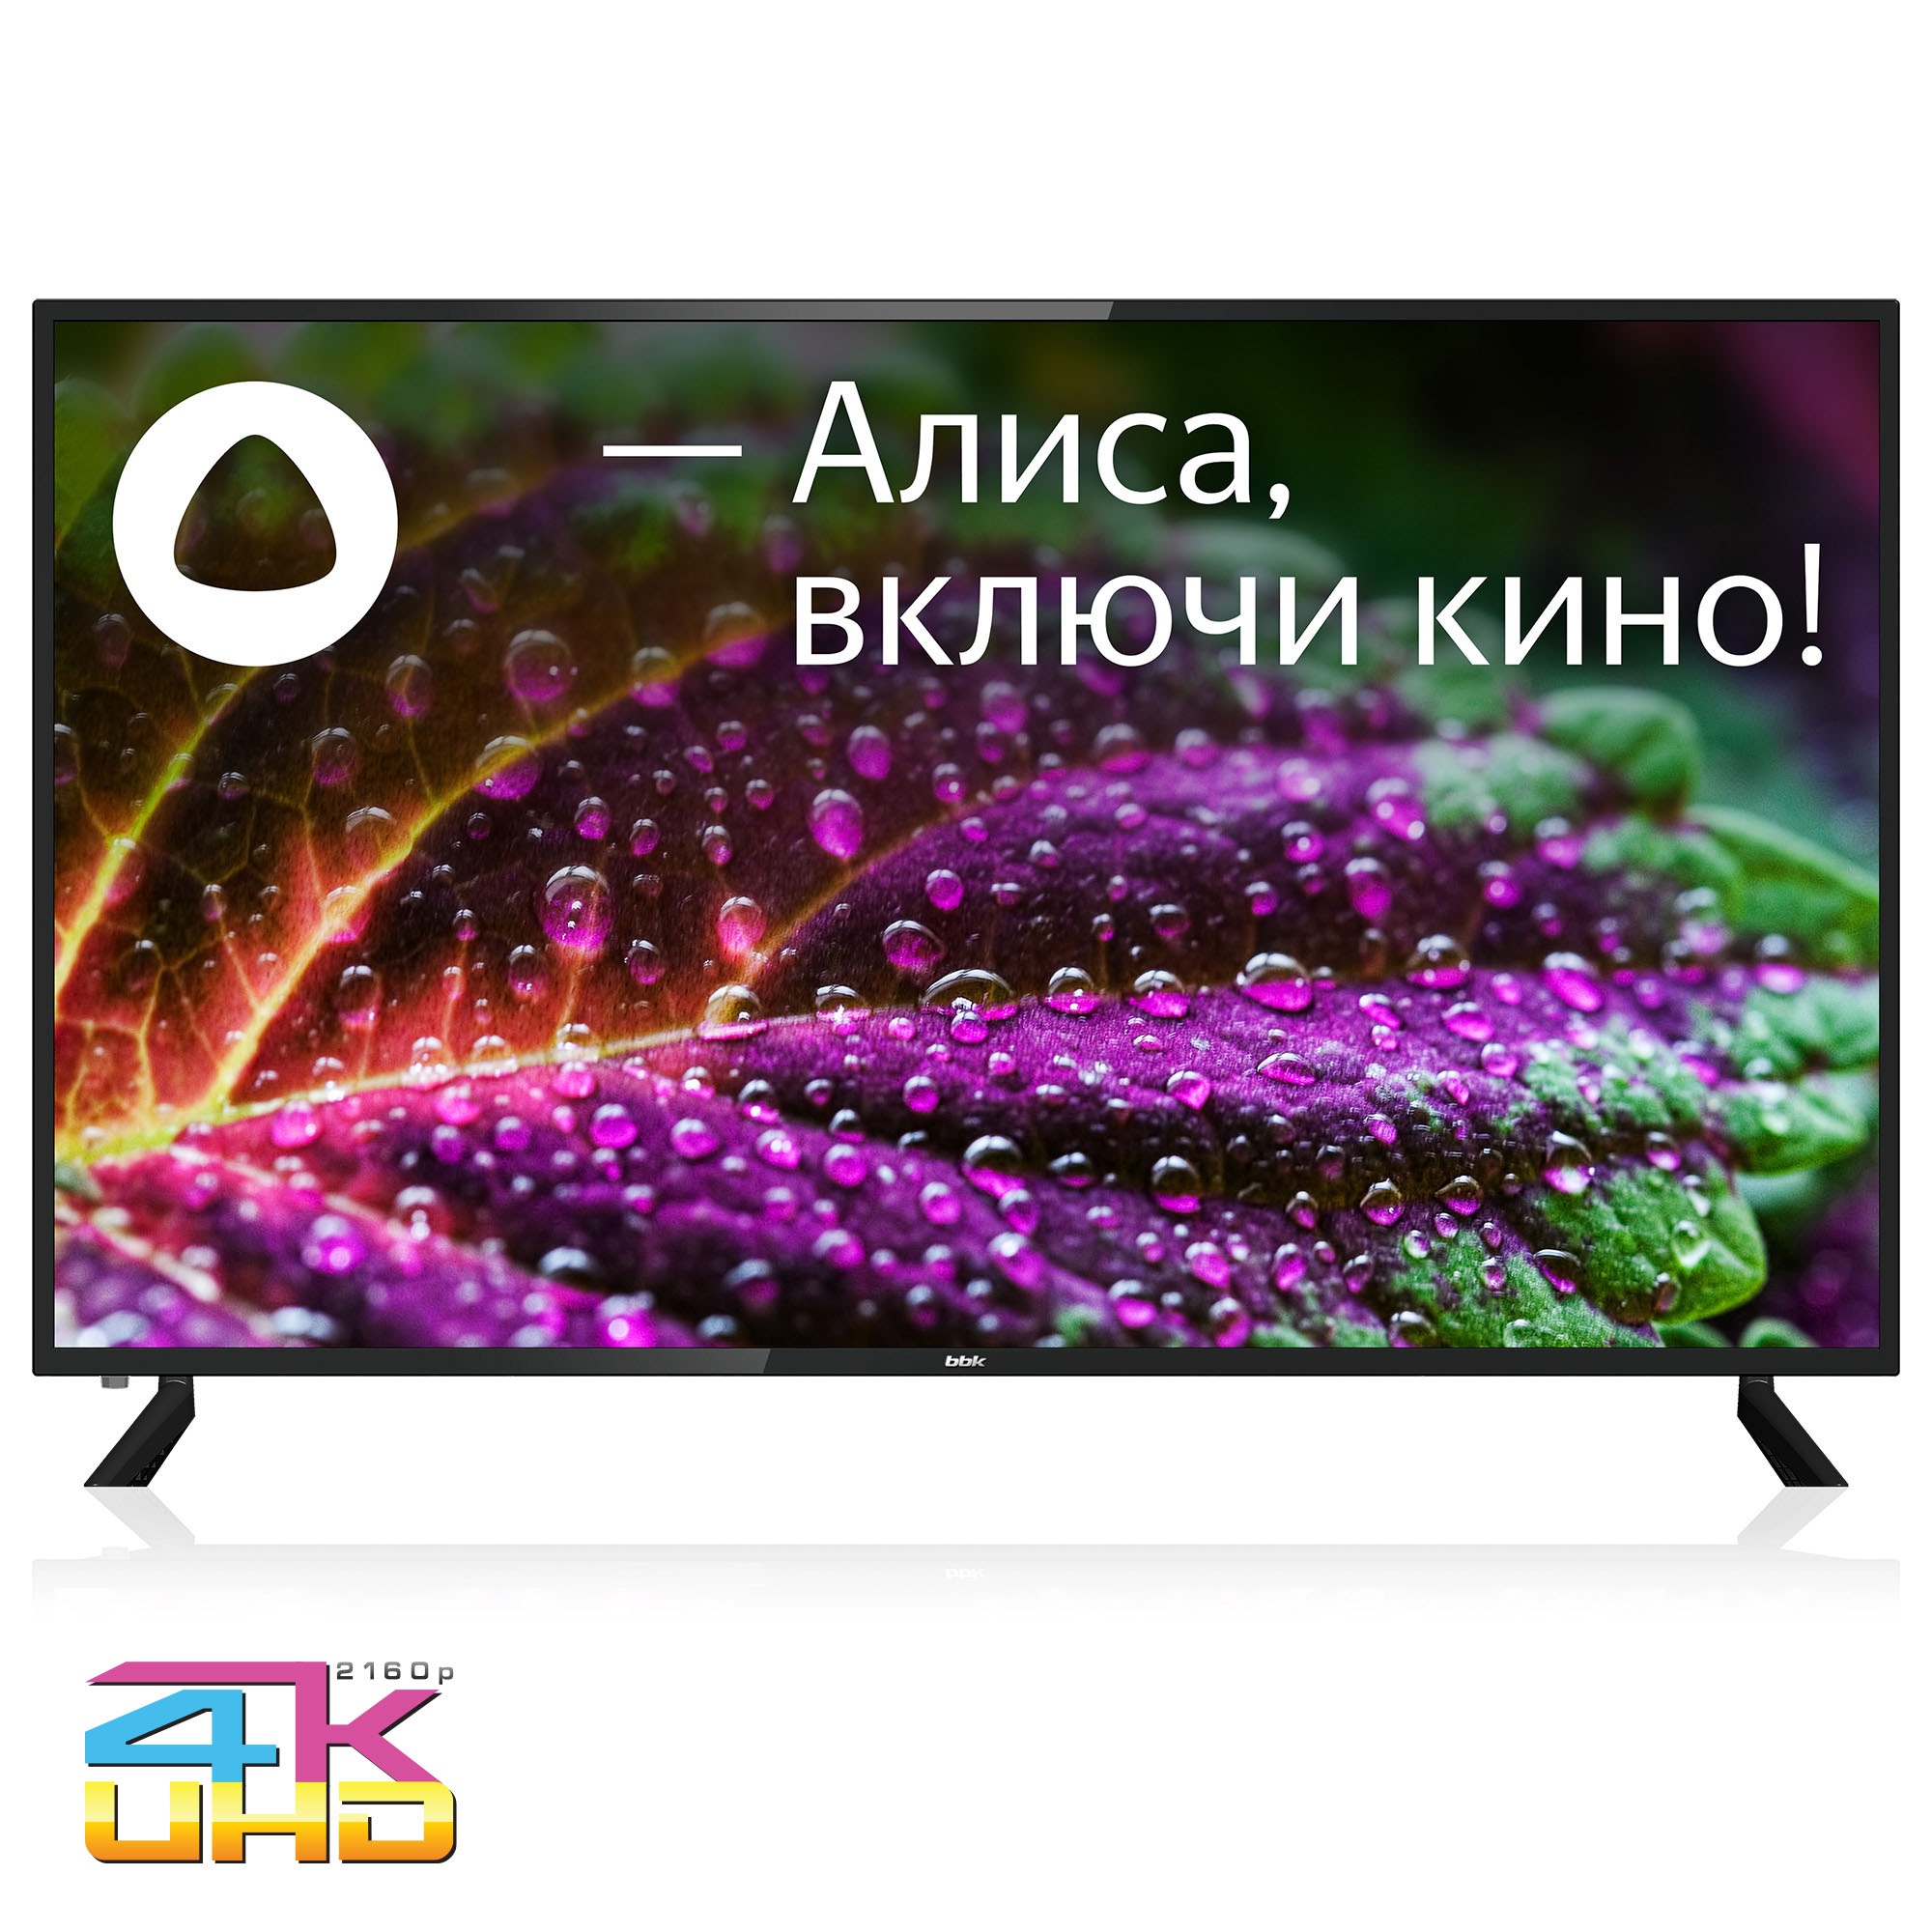 Телевизор BBK 65LED-9201/UTS2C Яндекс.ТВ черный телевизор bbk 65led 9201 uts2c черный 4k ultra hd 60hz dvb t2 dvb c dvb s2 usb wifi smart tv яндекс тв